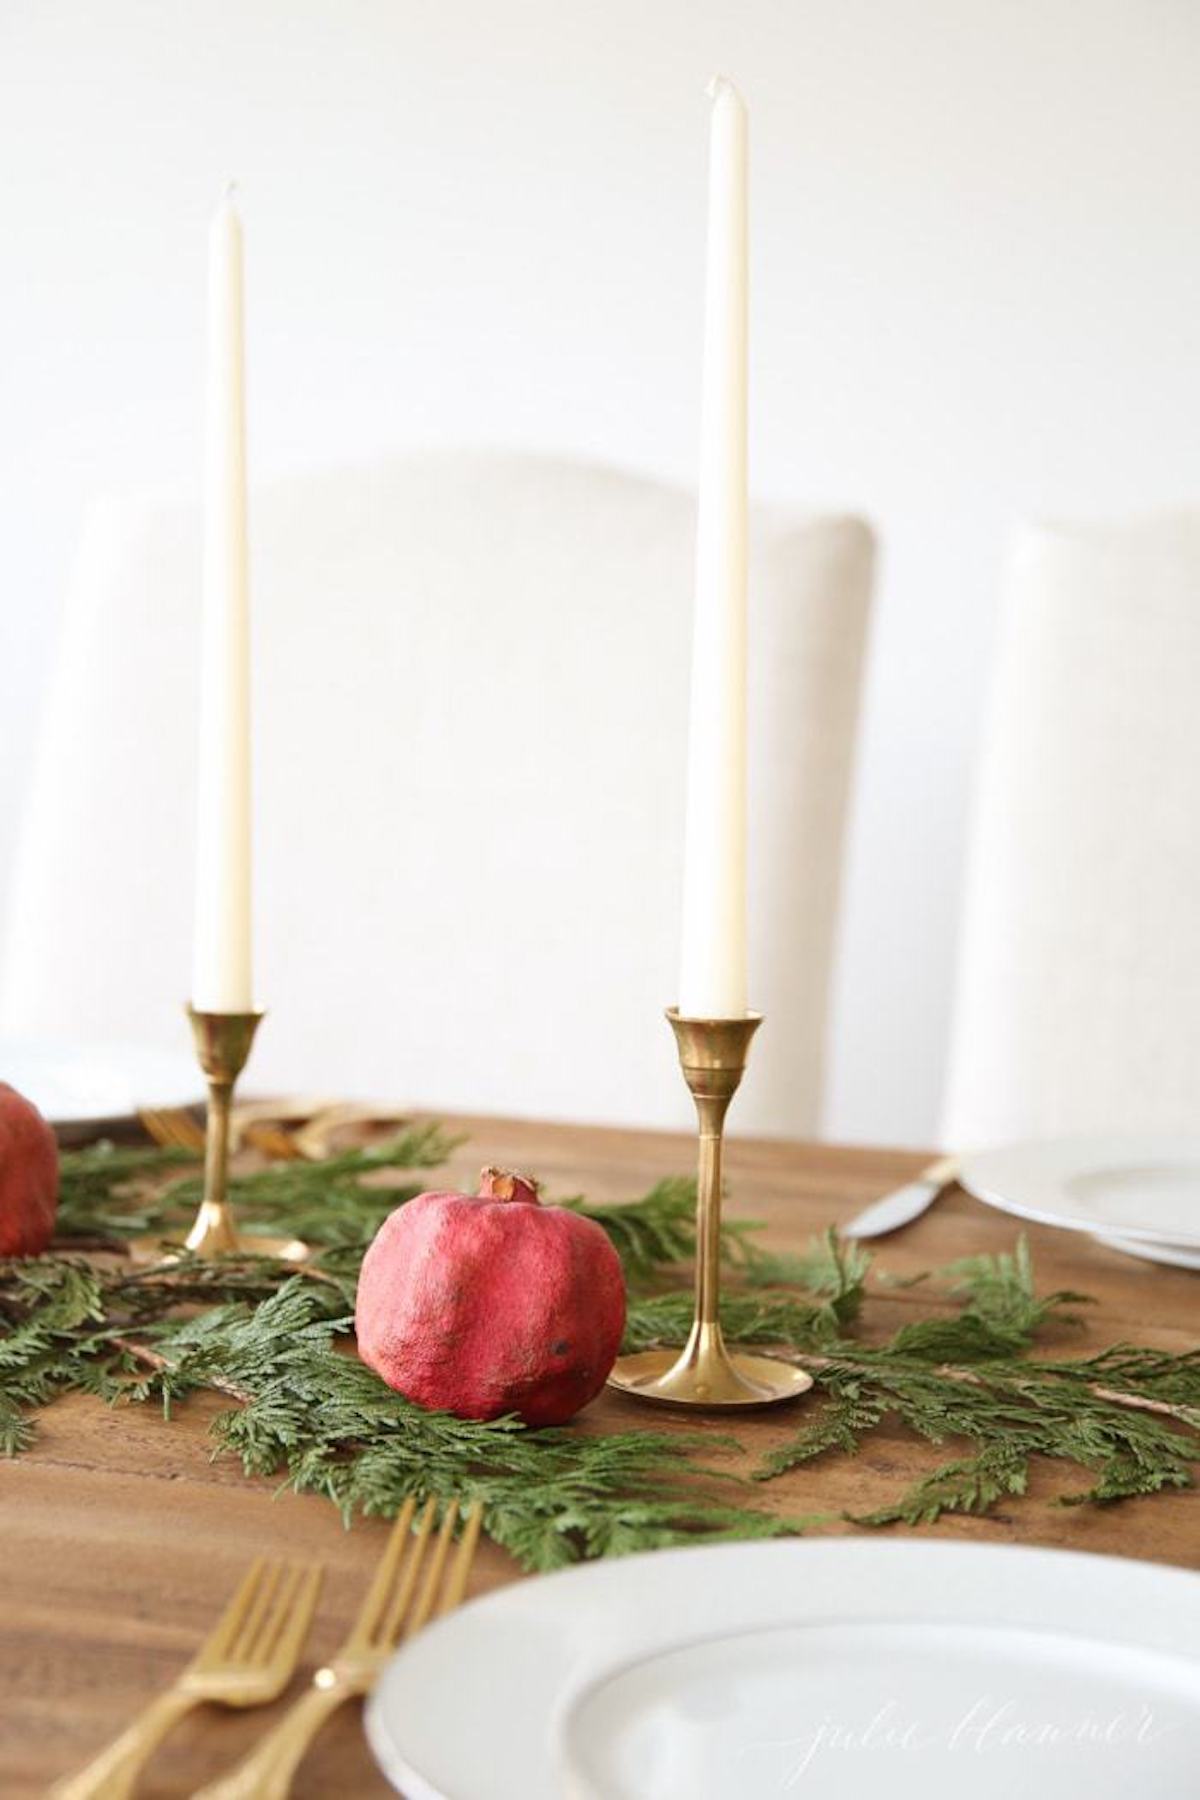 A festive Christmas candle centerpiece featuring pomegranates.